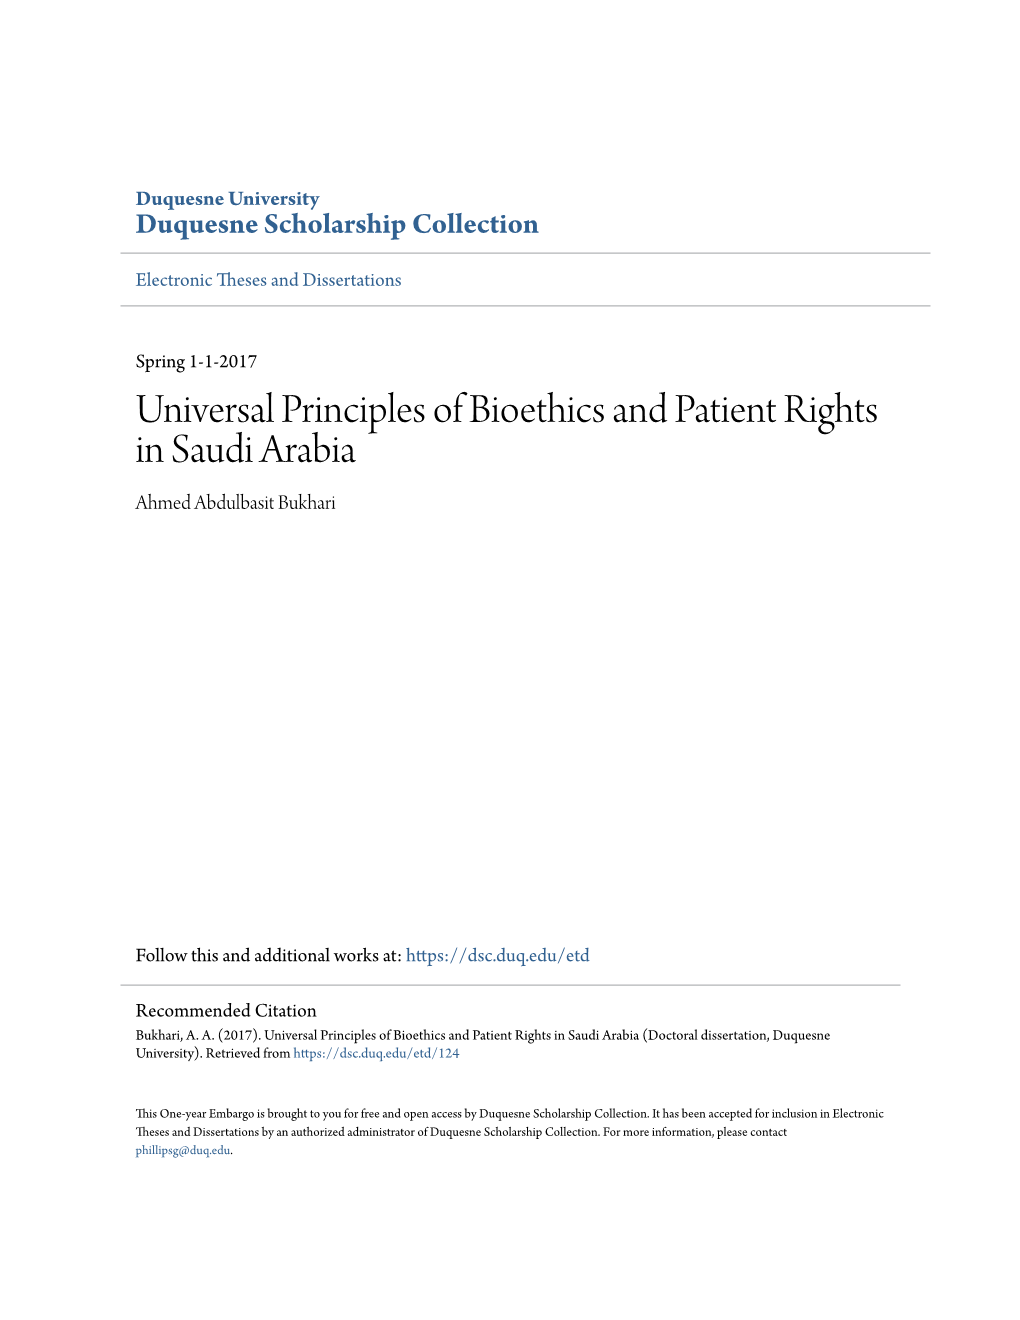 Universal Principles of Bioethics and Patient Rights in Saudi Arabia Ahmed Abdulbasit Bukhari